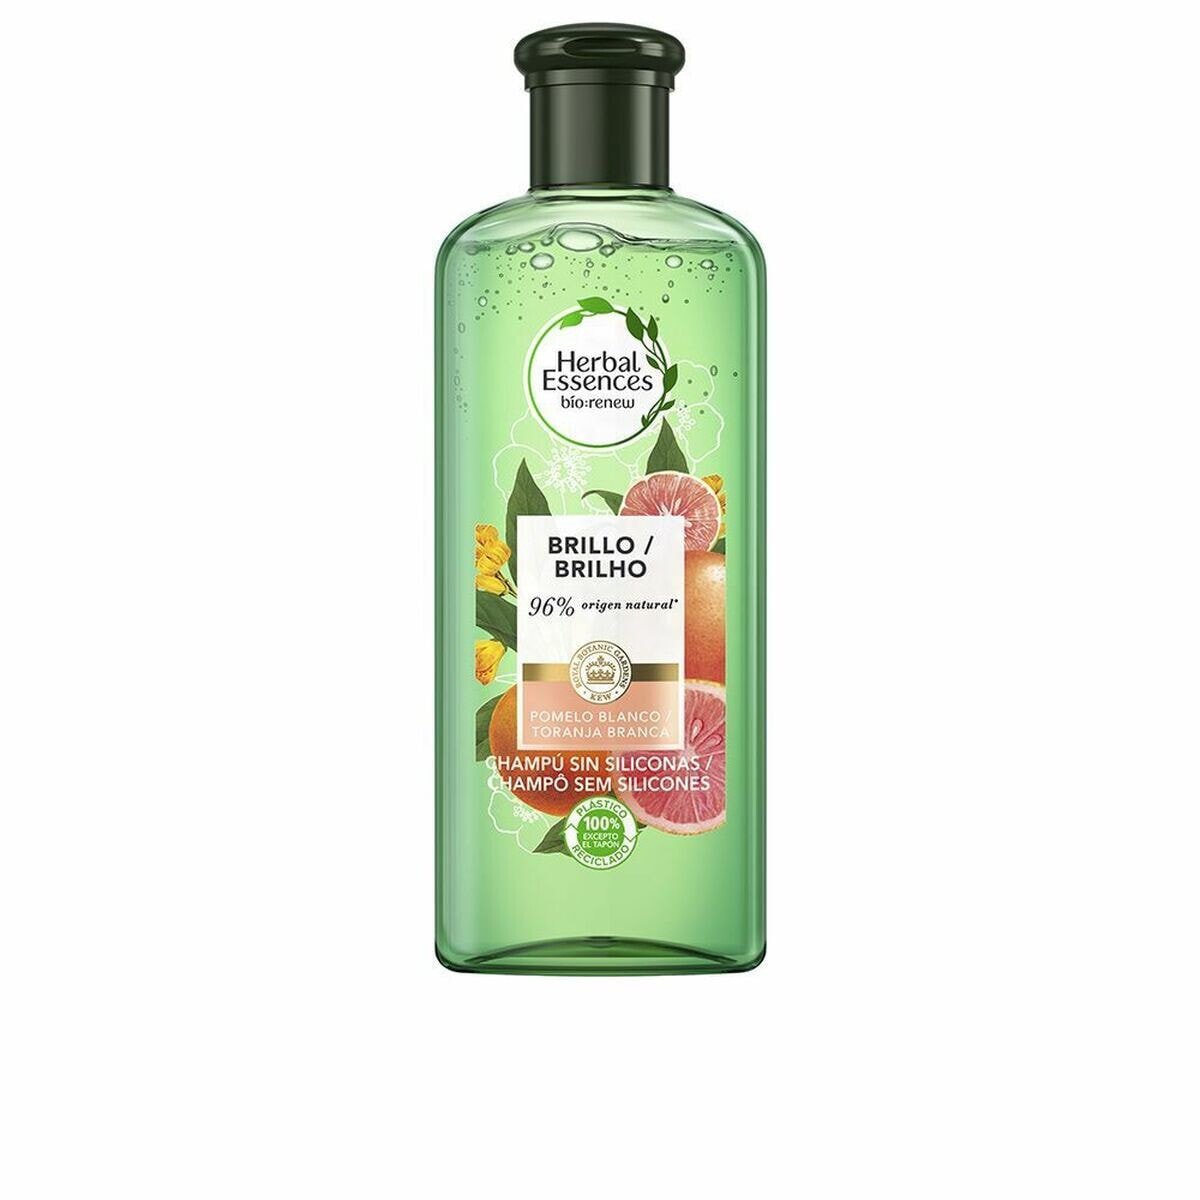 Shampoo Herbal 8086486 Shine Grapefruit Mint 250 ml